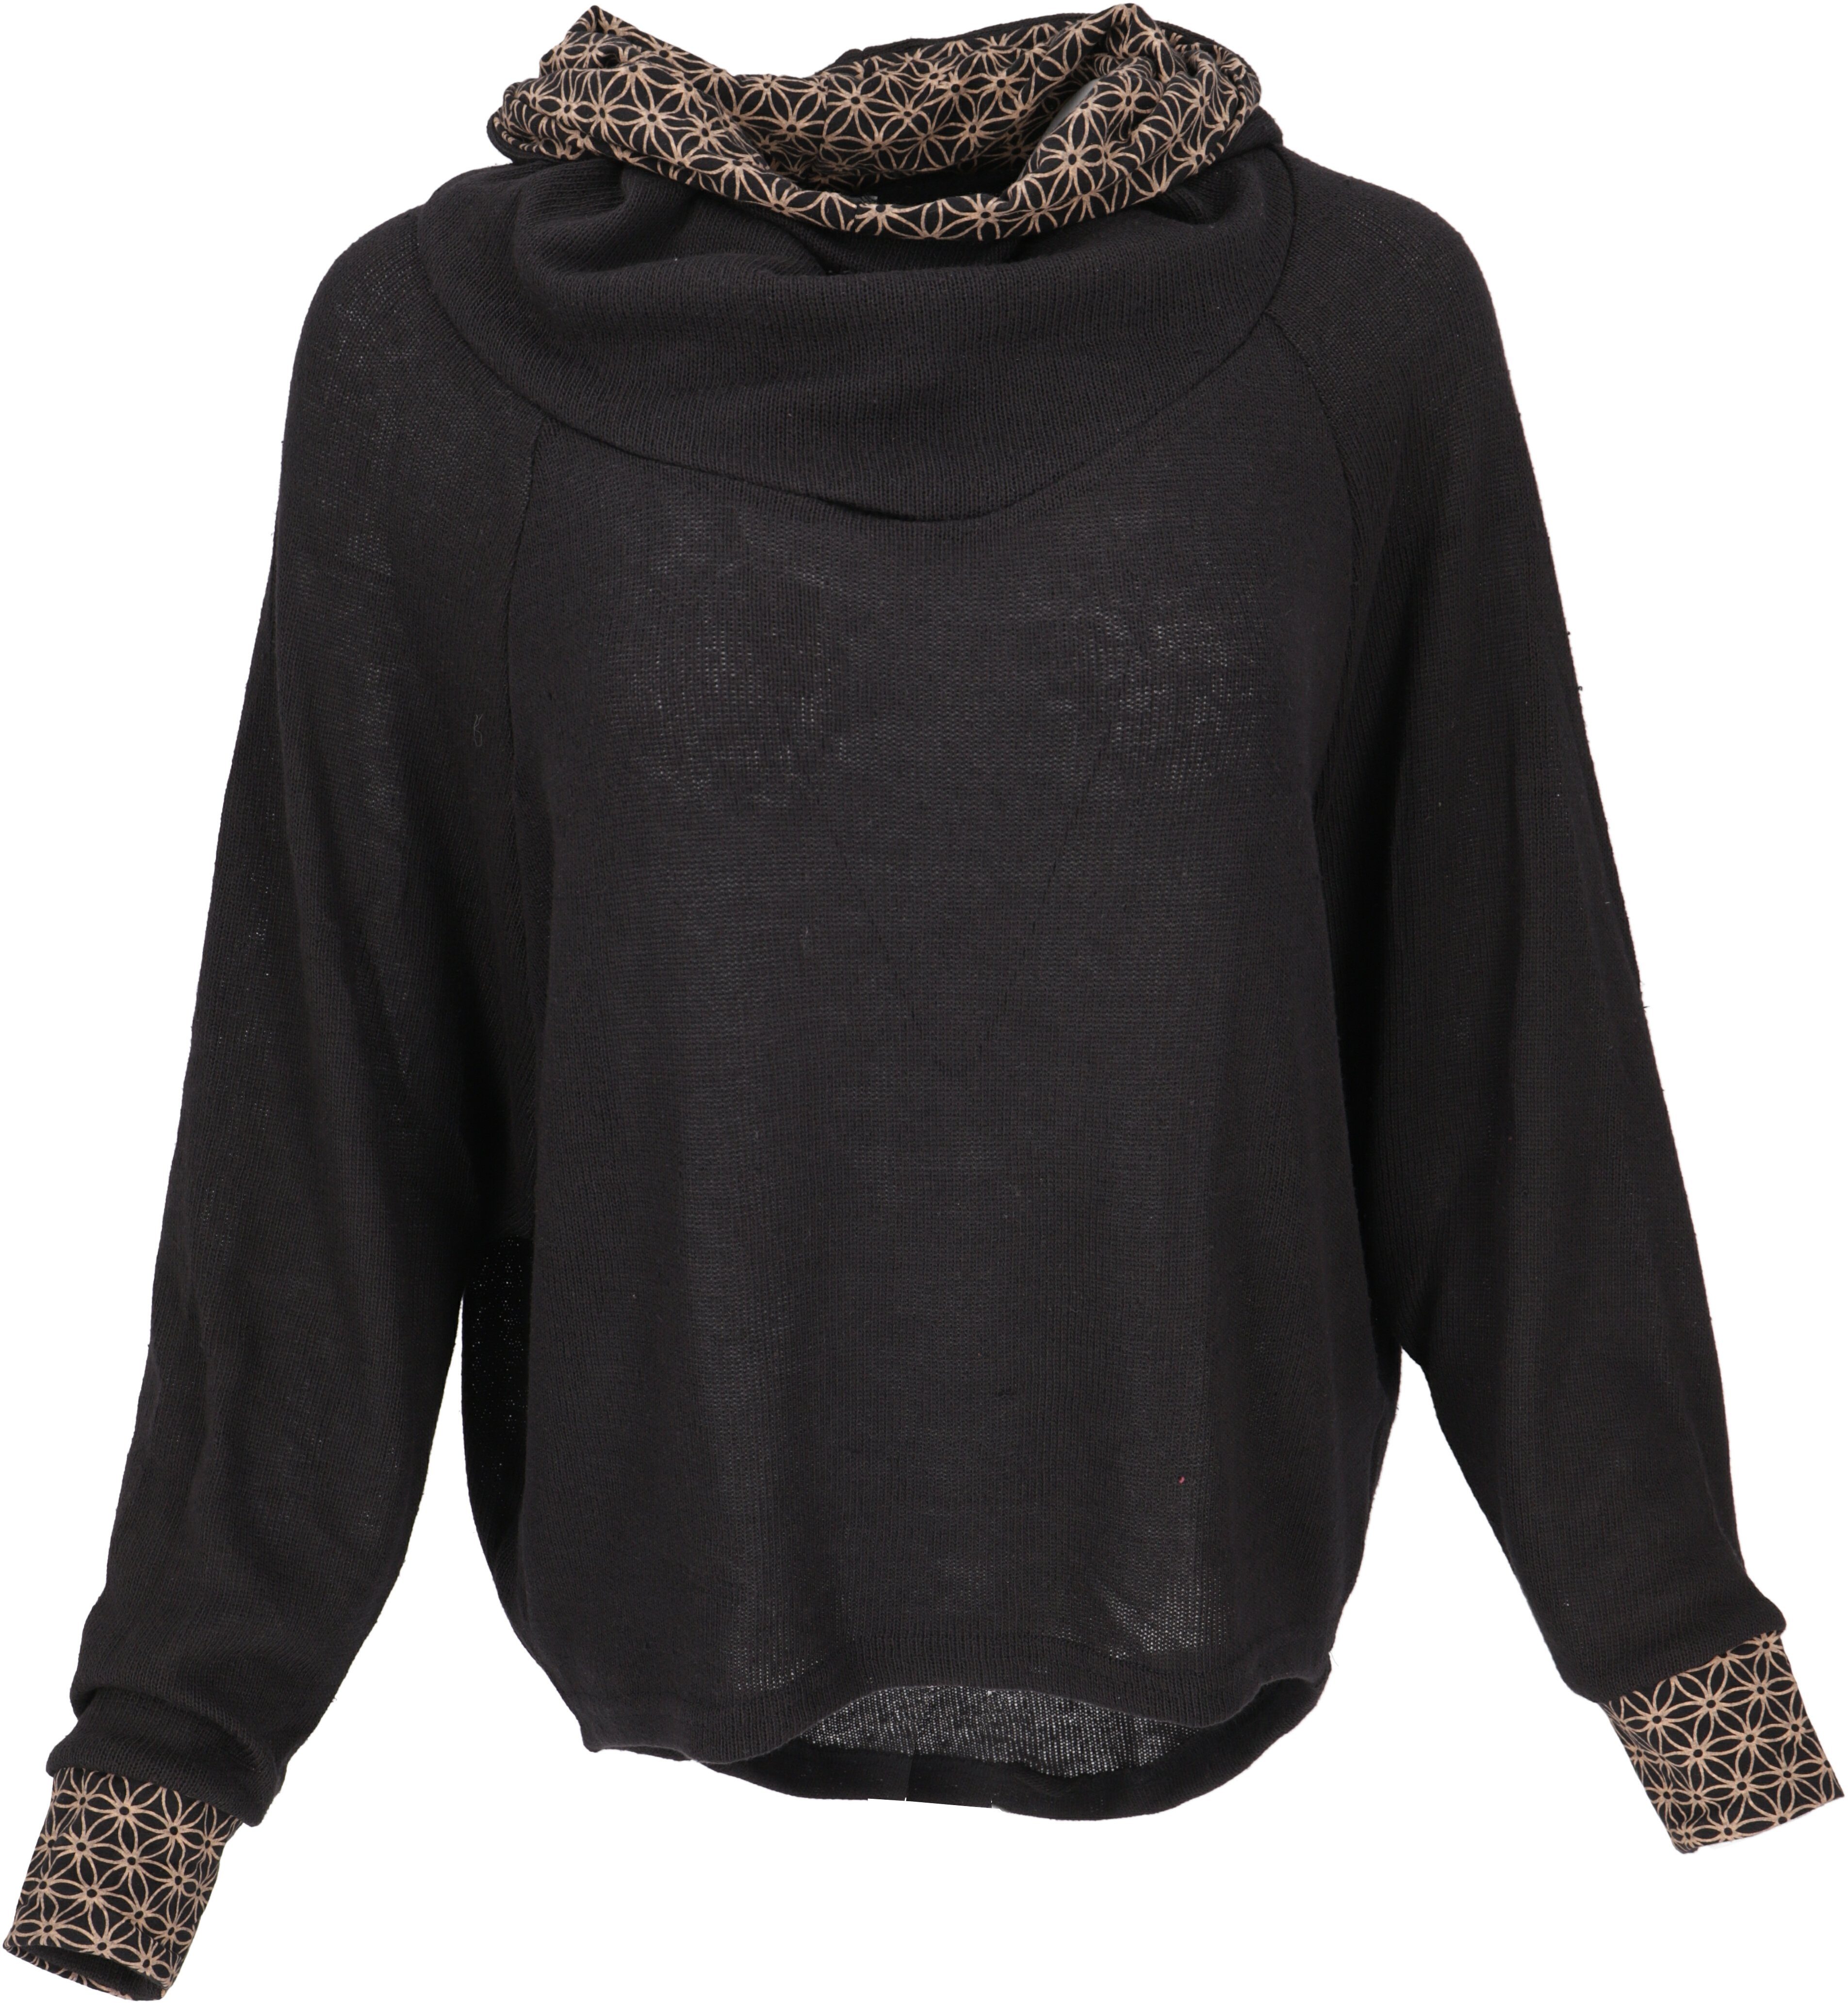 Guru-Shop Longsleeve Hoody, Sweatshirt, Pullover, Kapuzenpullover -.. alternative Bekleidung schwarz